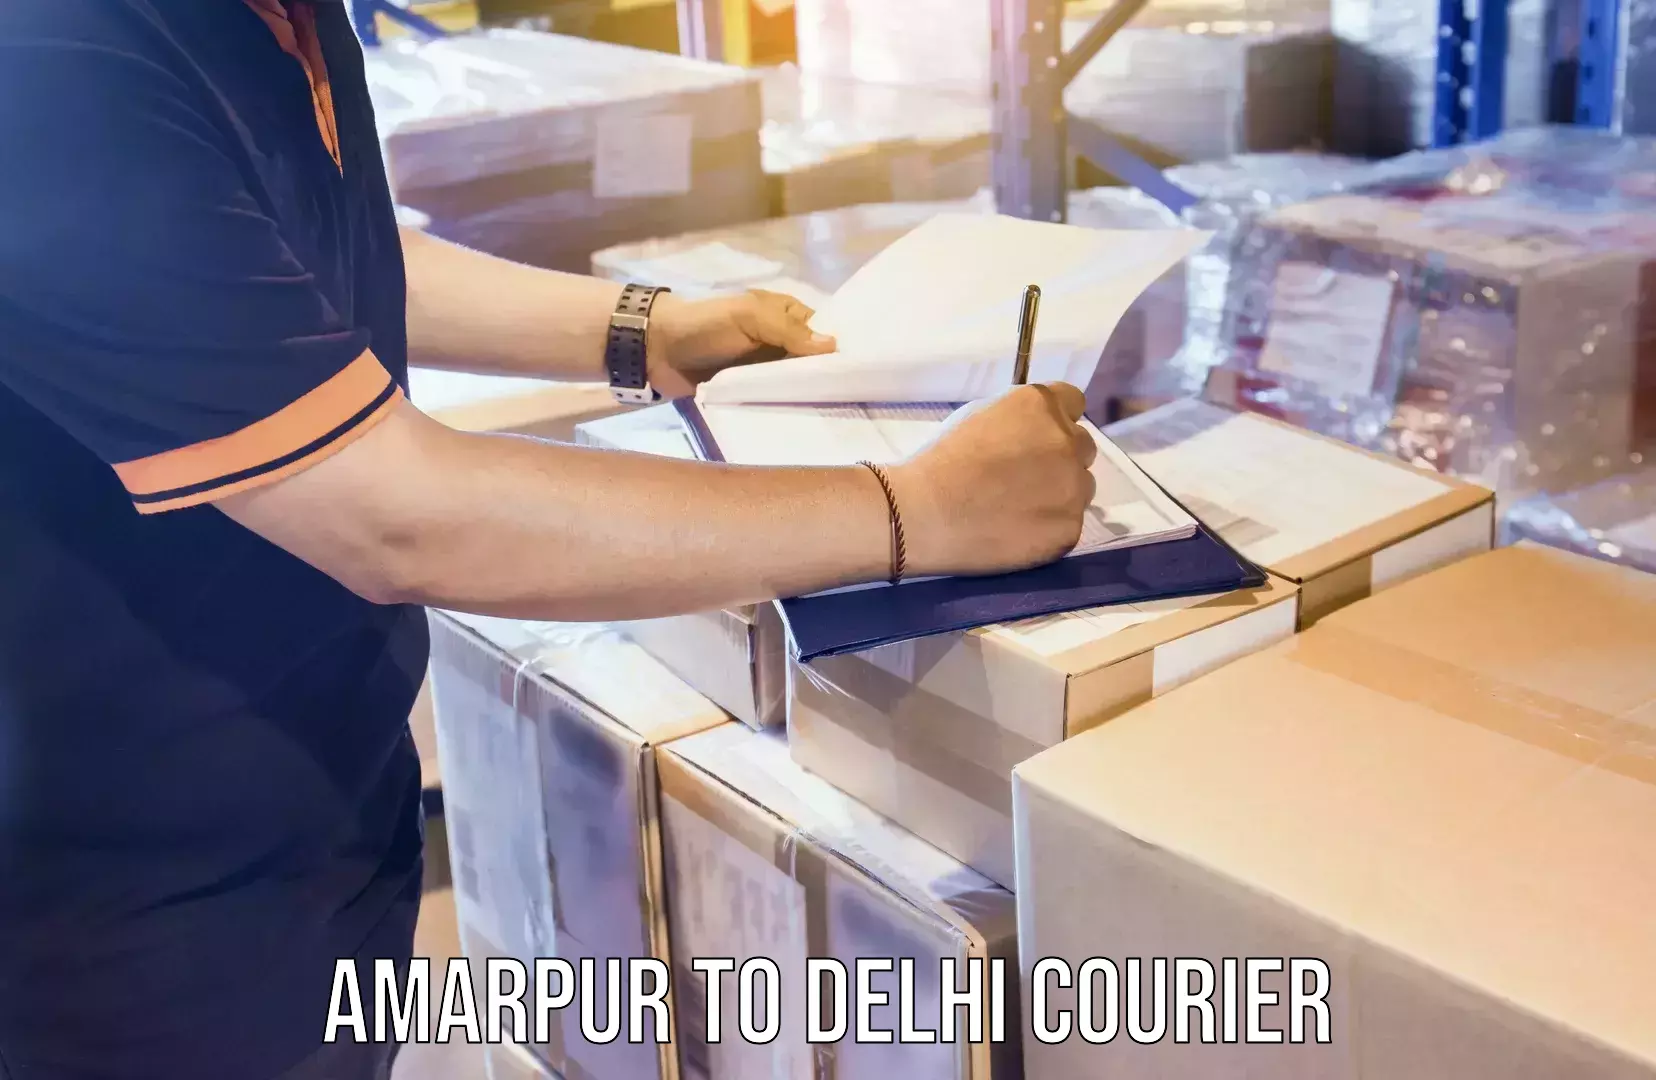 Global courier networks Amarpur to Delhi